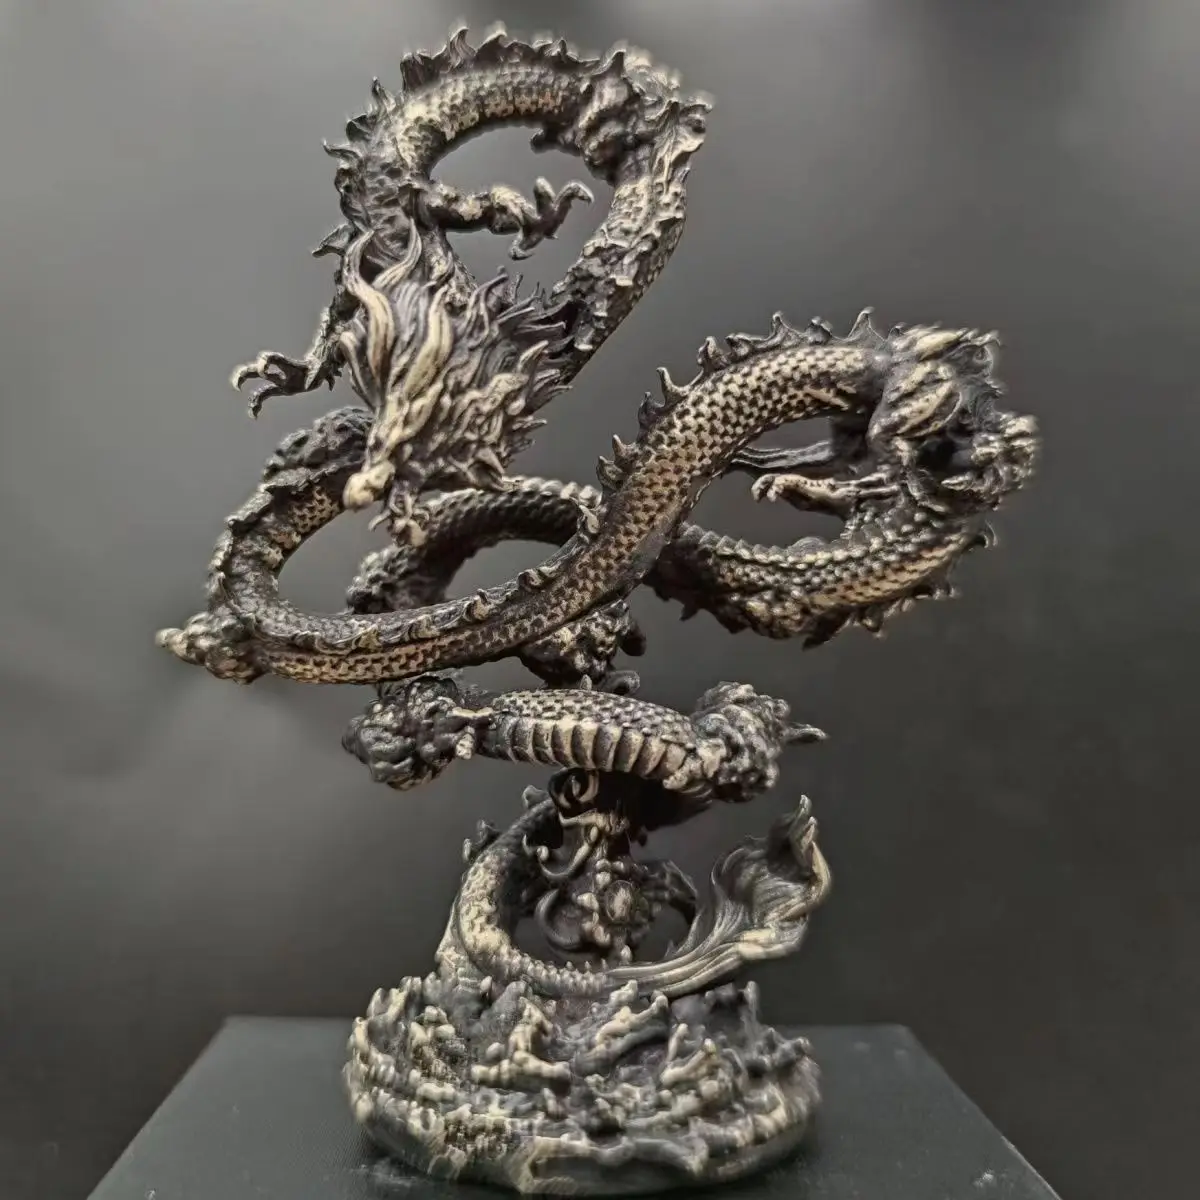 11cm Brass Dragon Casting Statue Animal Metal Figurine Home Decor Desktop Crafts Sculpture Decoration